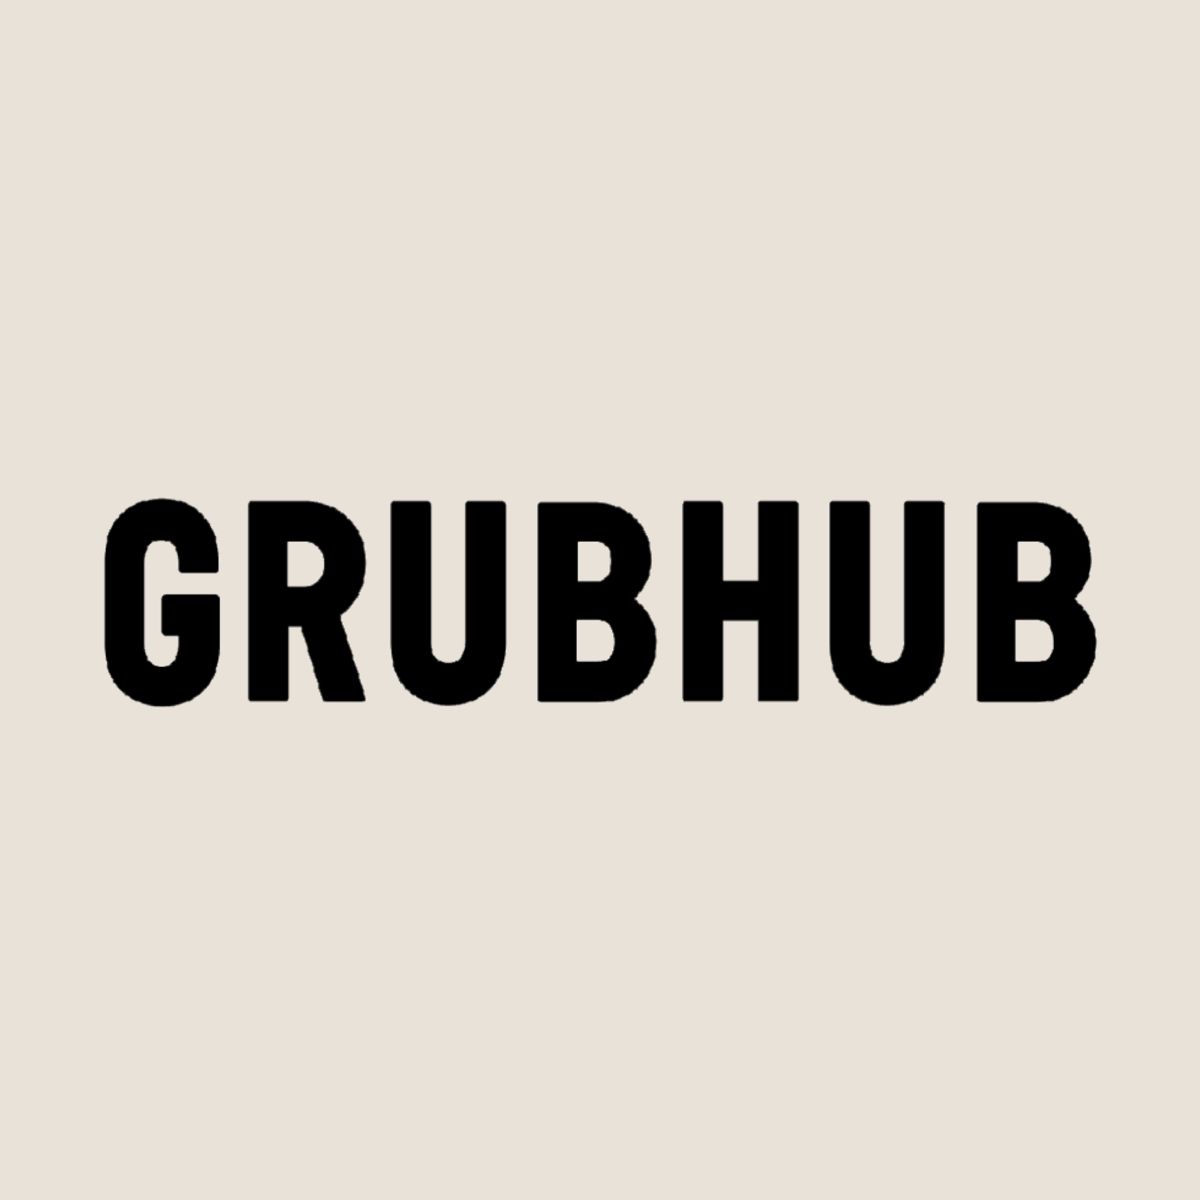 Grubhub, Phone icon .ca